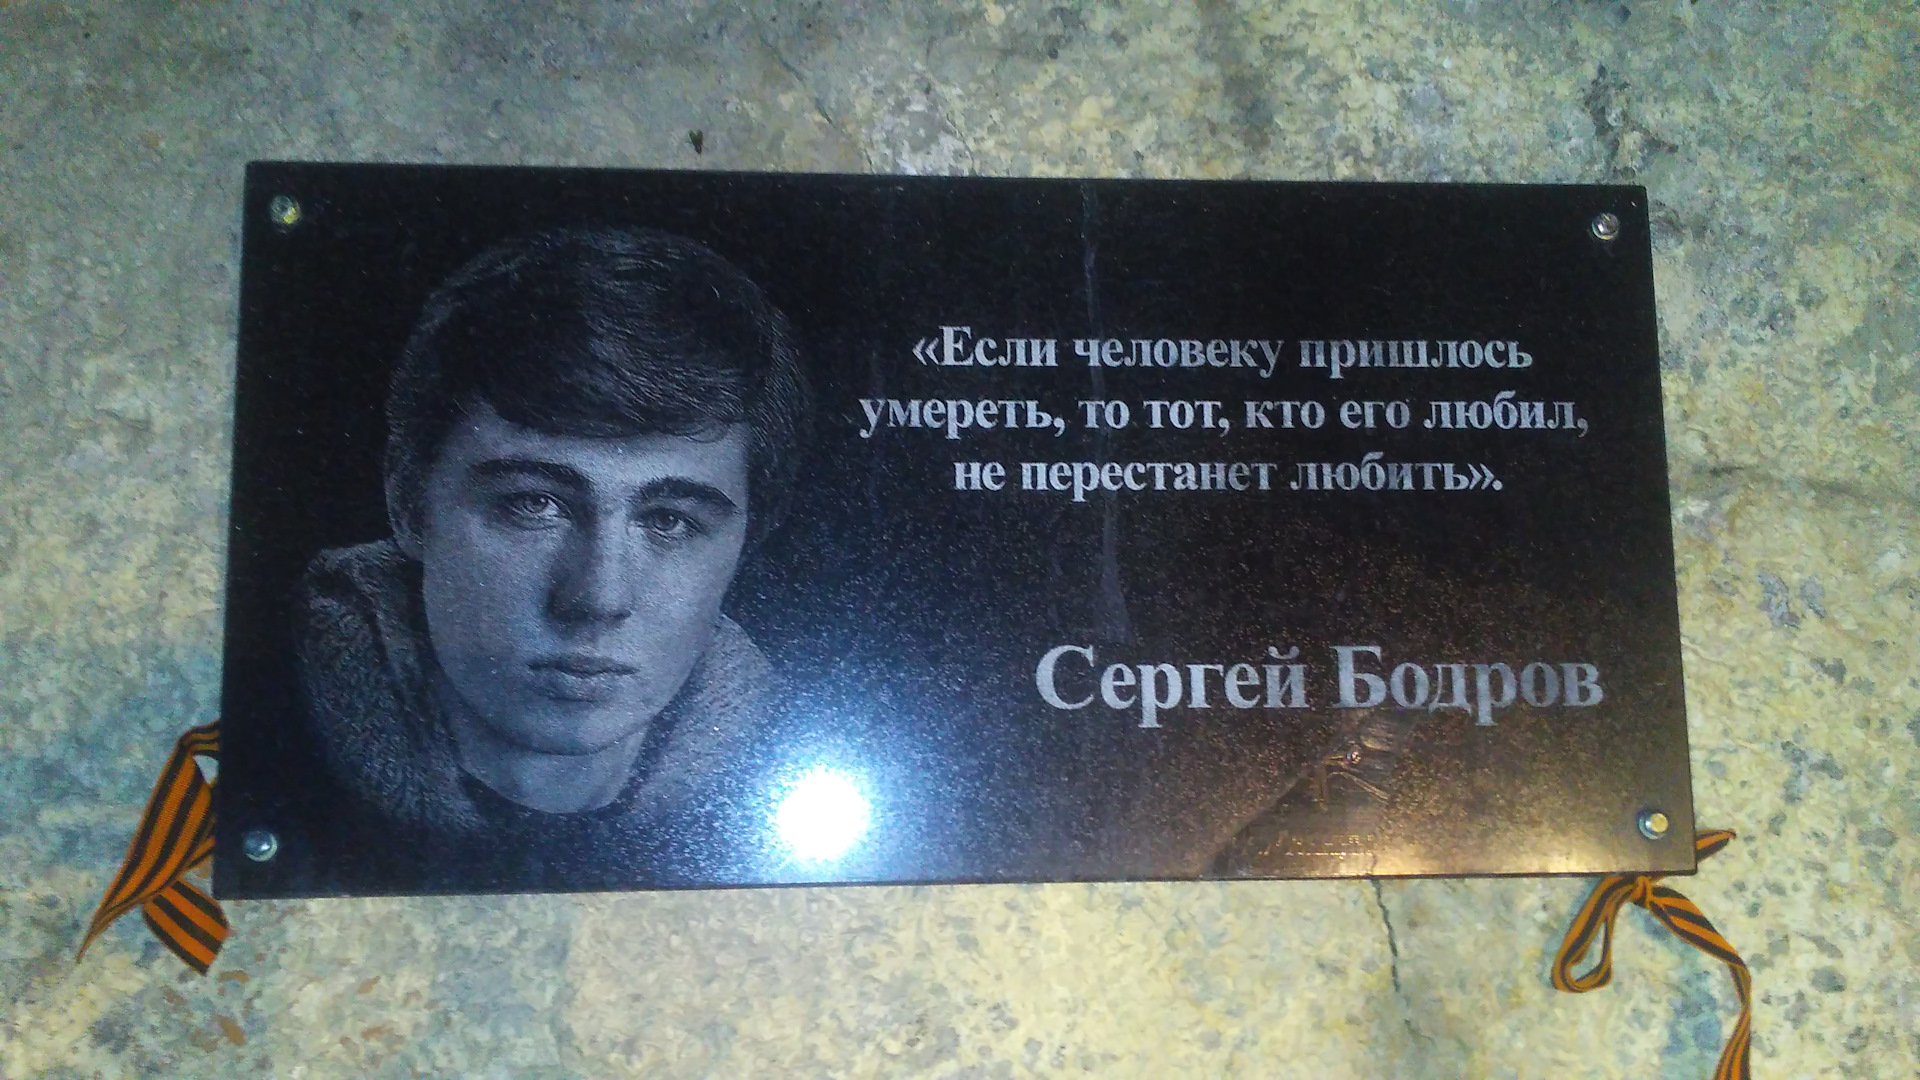 Дата гибели Сергея Бодрова младшего